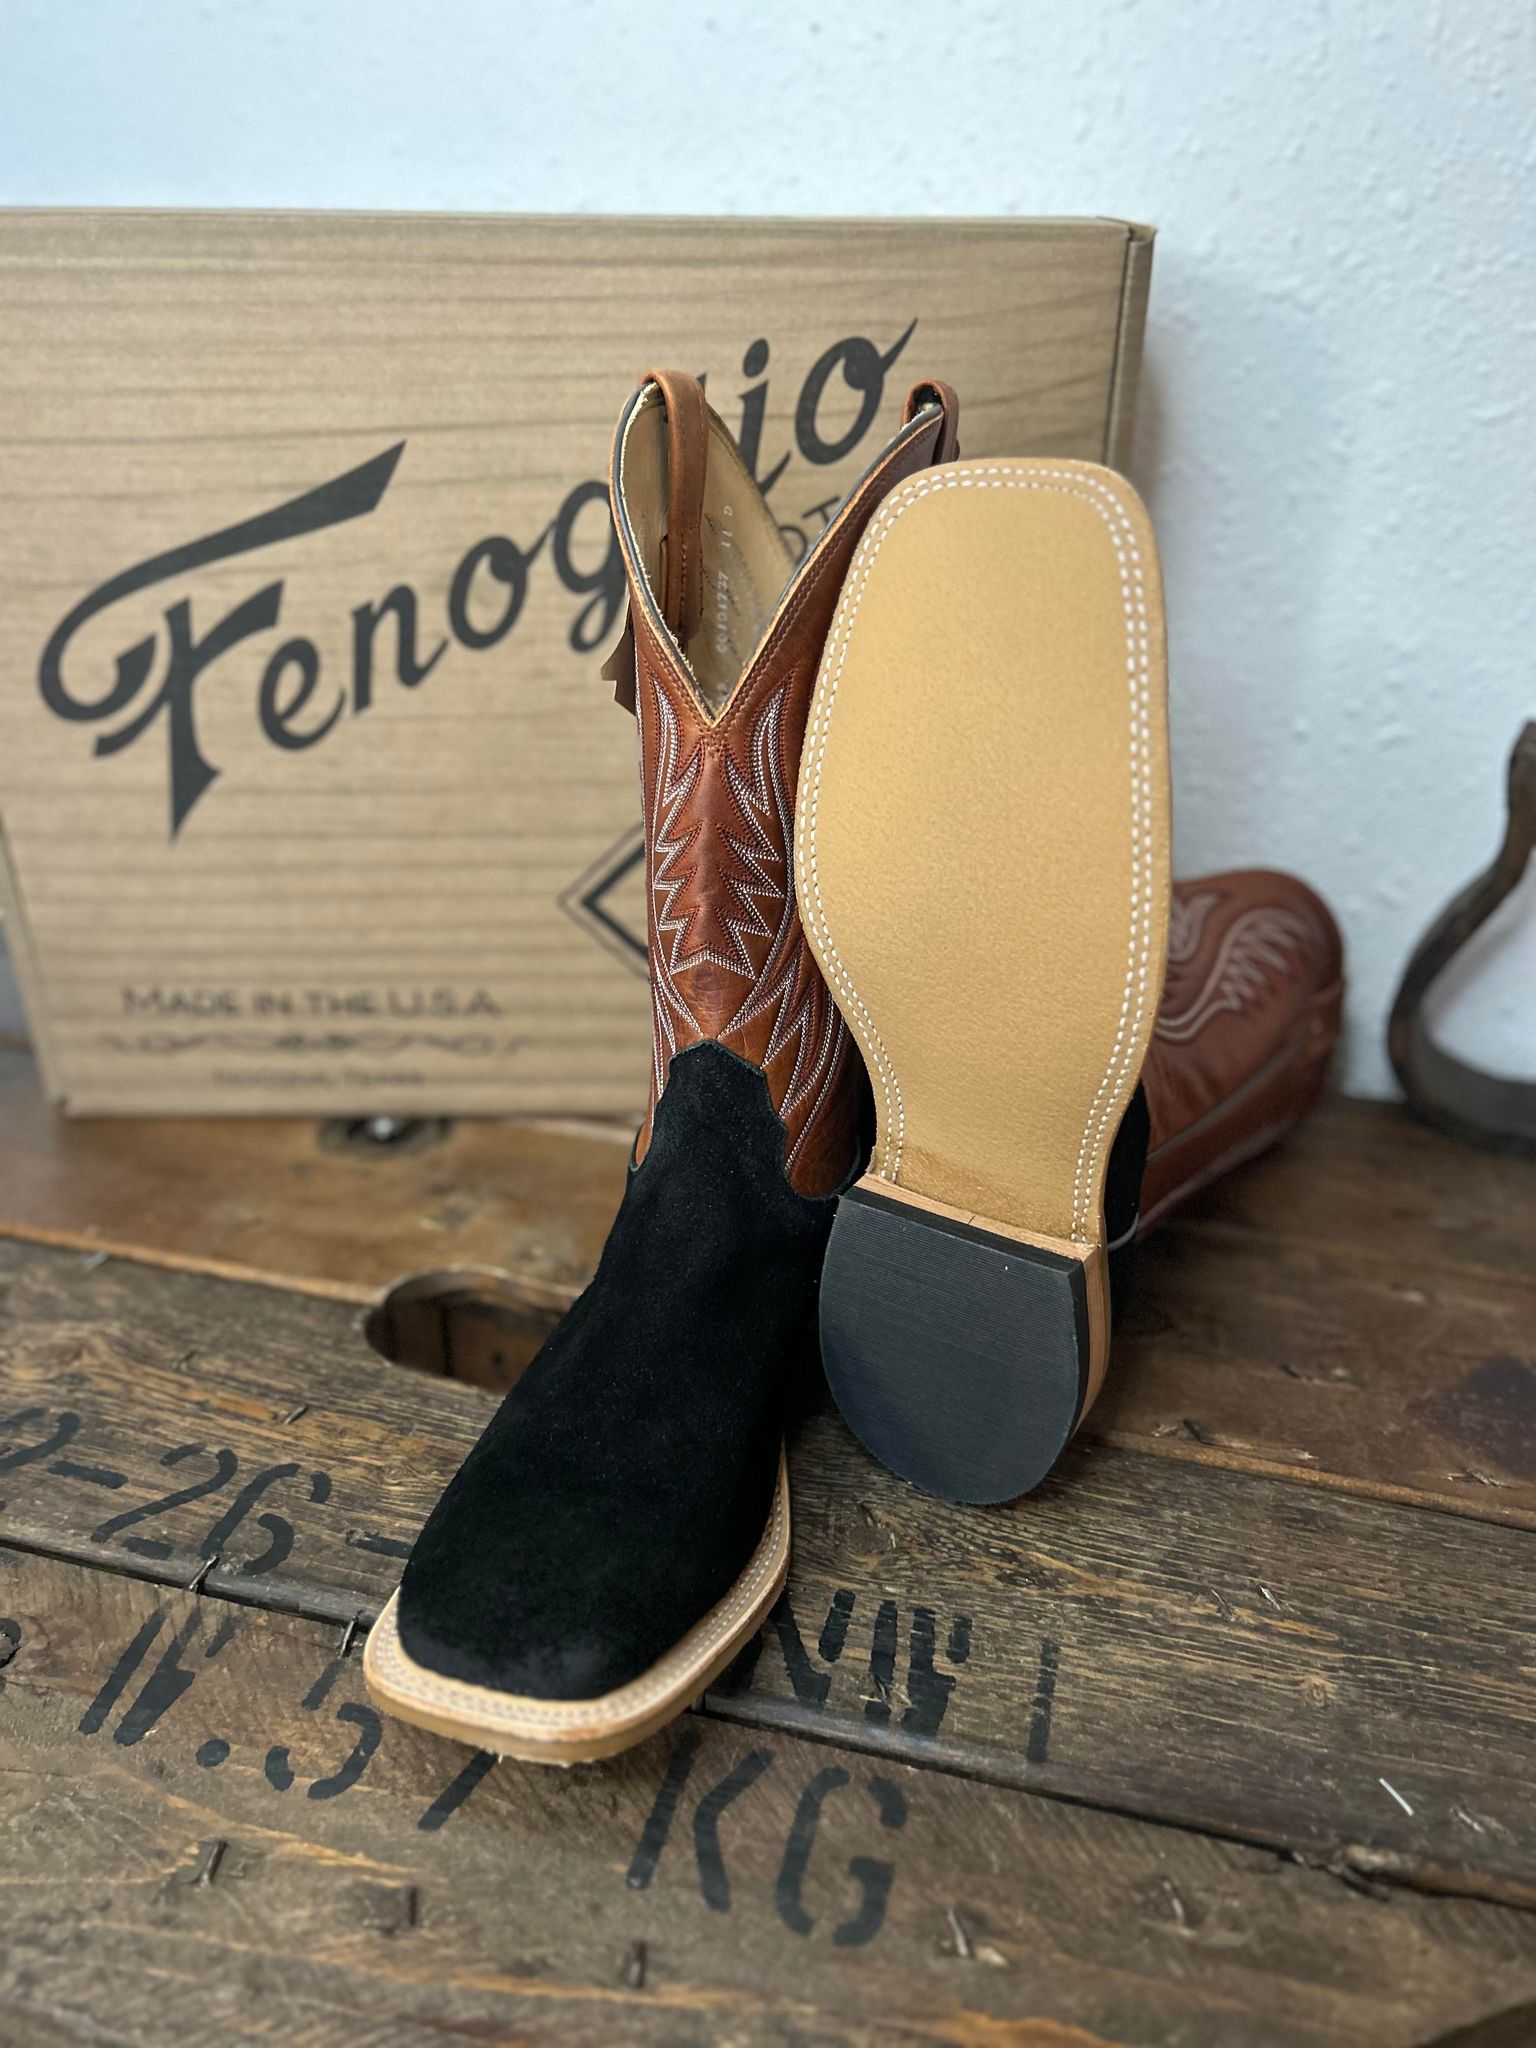 Men's Fenoglio Black Roughout & Cognac Leather Boots-Men's Boots-Fenoglio Boots-Lucky J Boots & More, Women's, Men's, & Kids Western Store Located in Carthage, MO